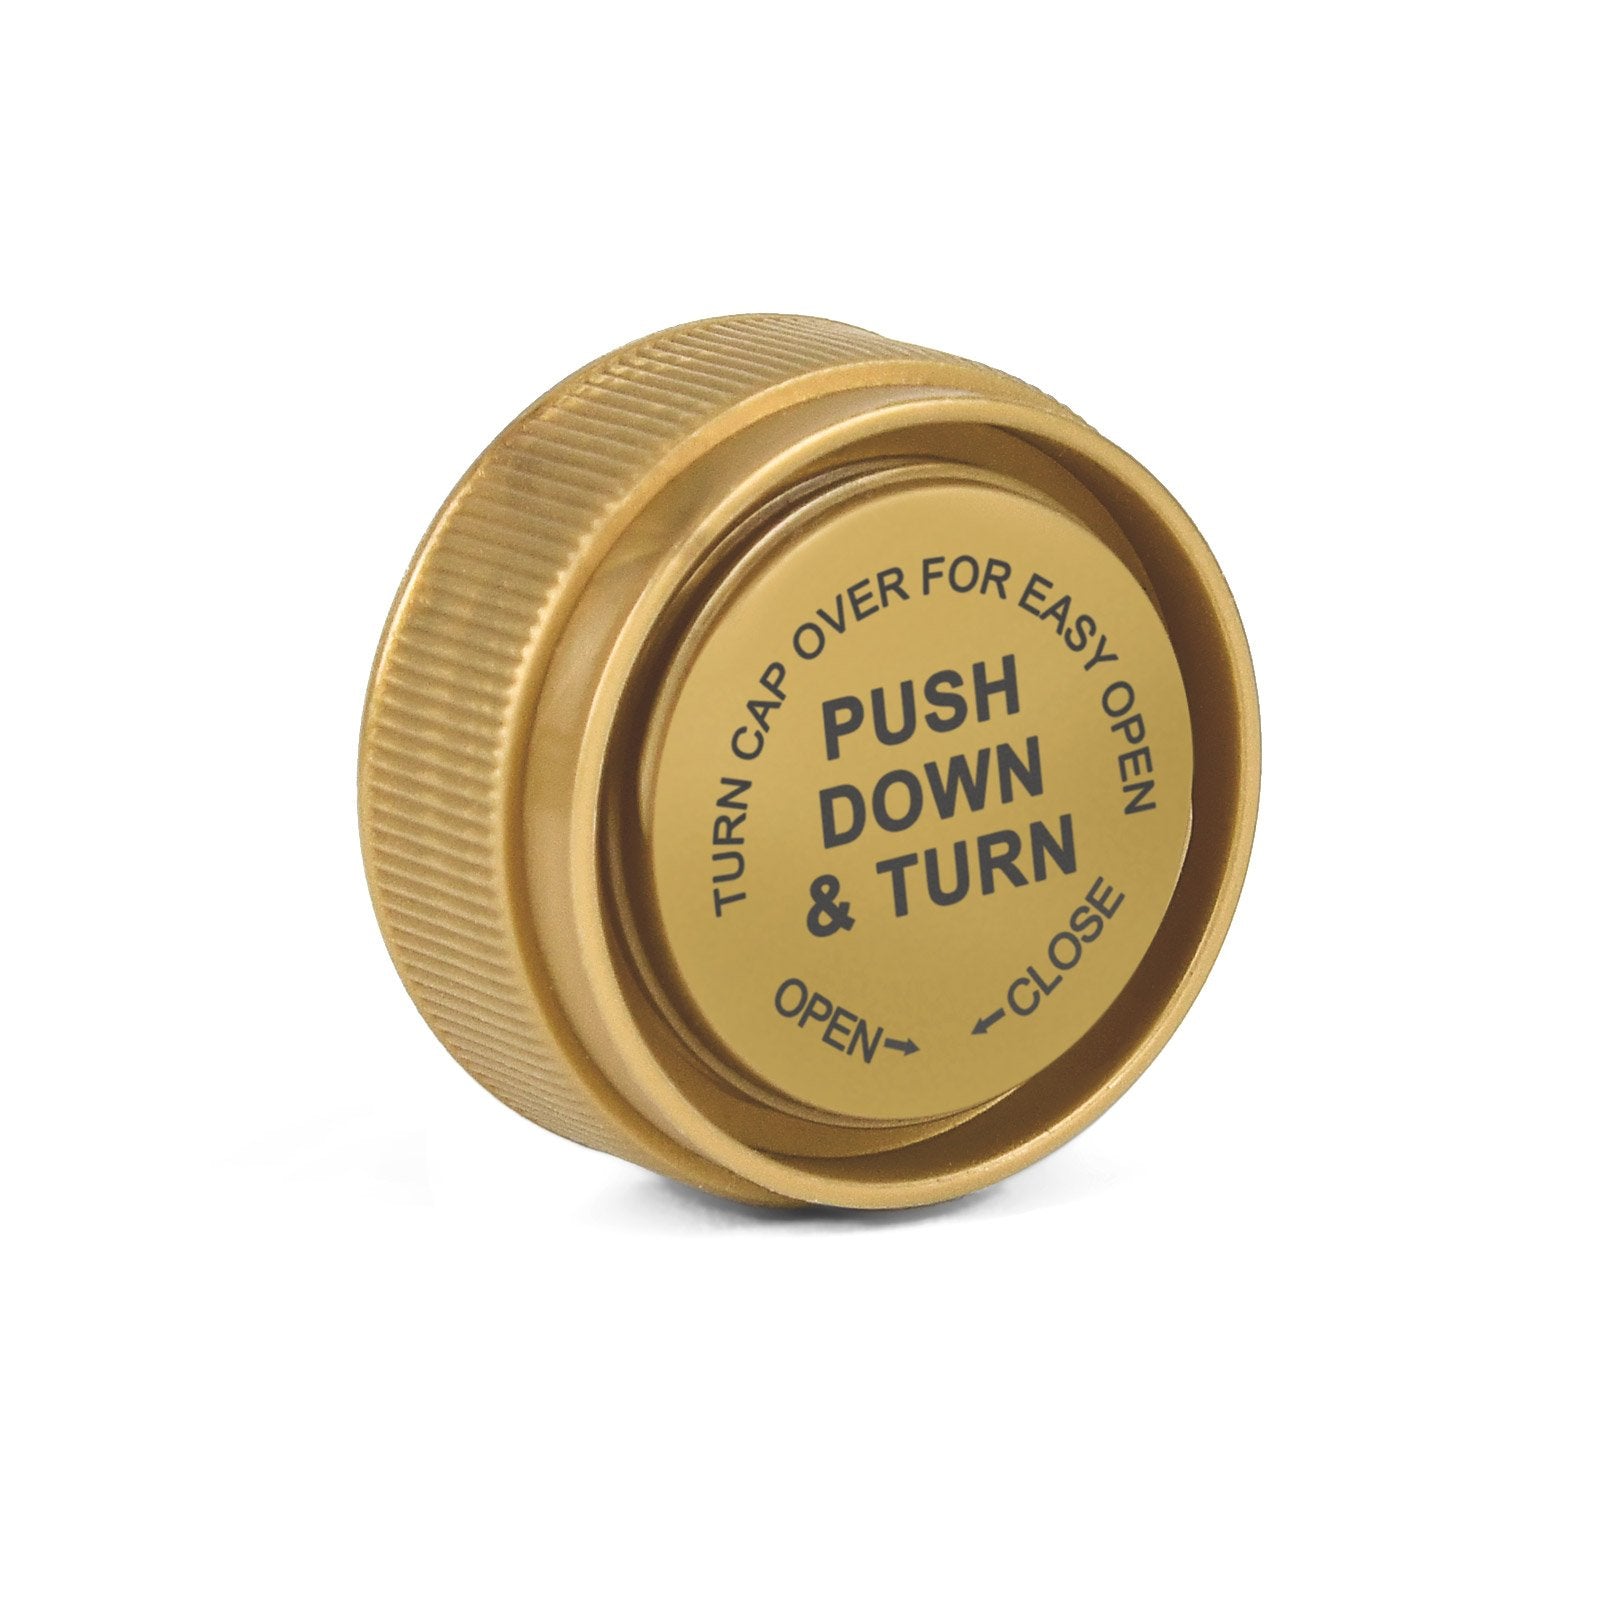 13 Dram Reversible Cap Opaque Gold - 1 Count